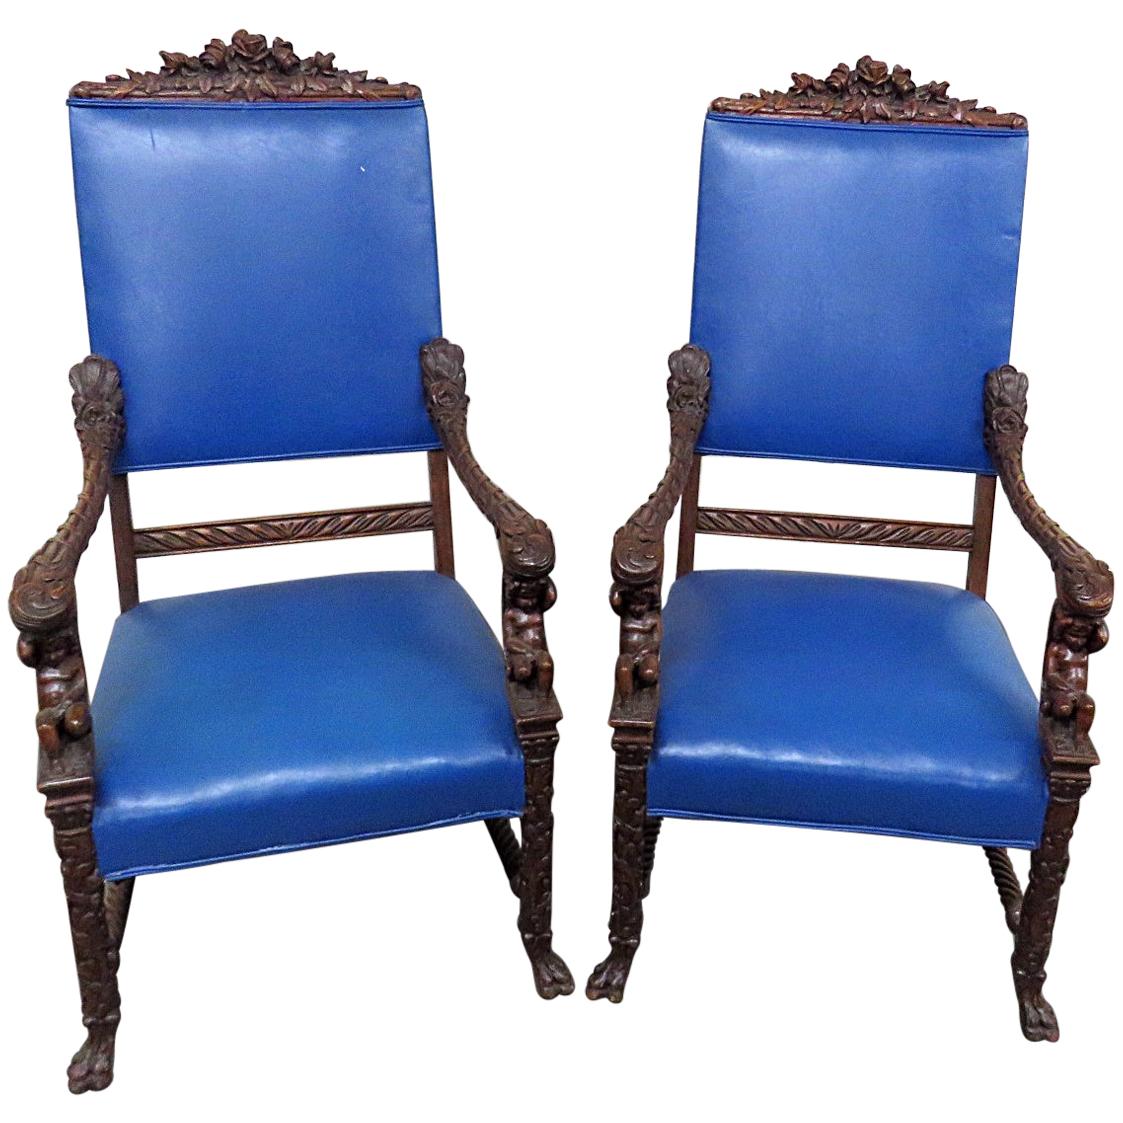 Pair of Renaissance Style Cherub Putti Throne Chairs Attributed to Horner